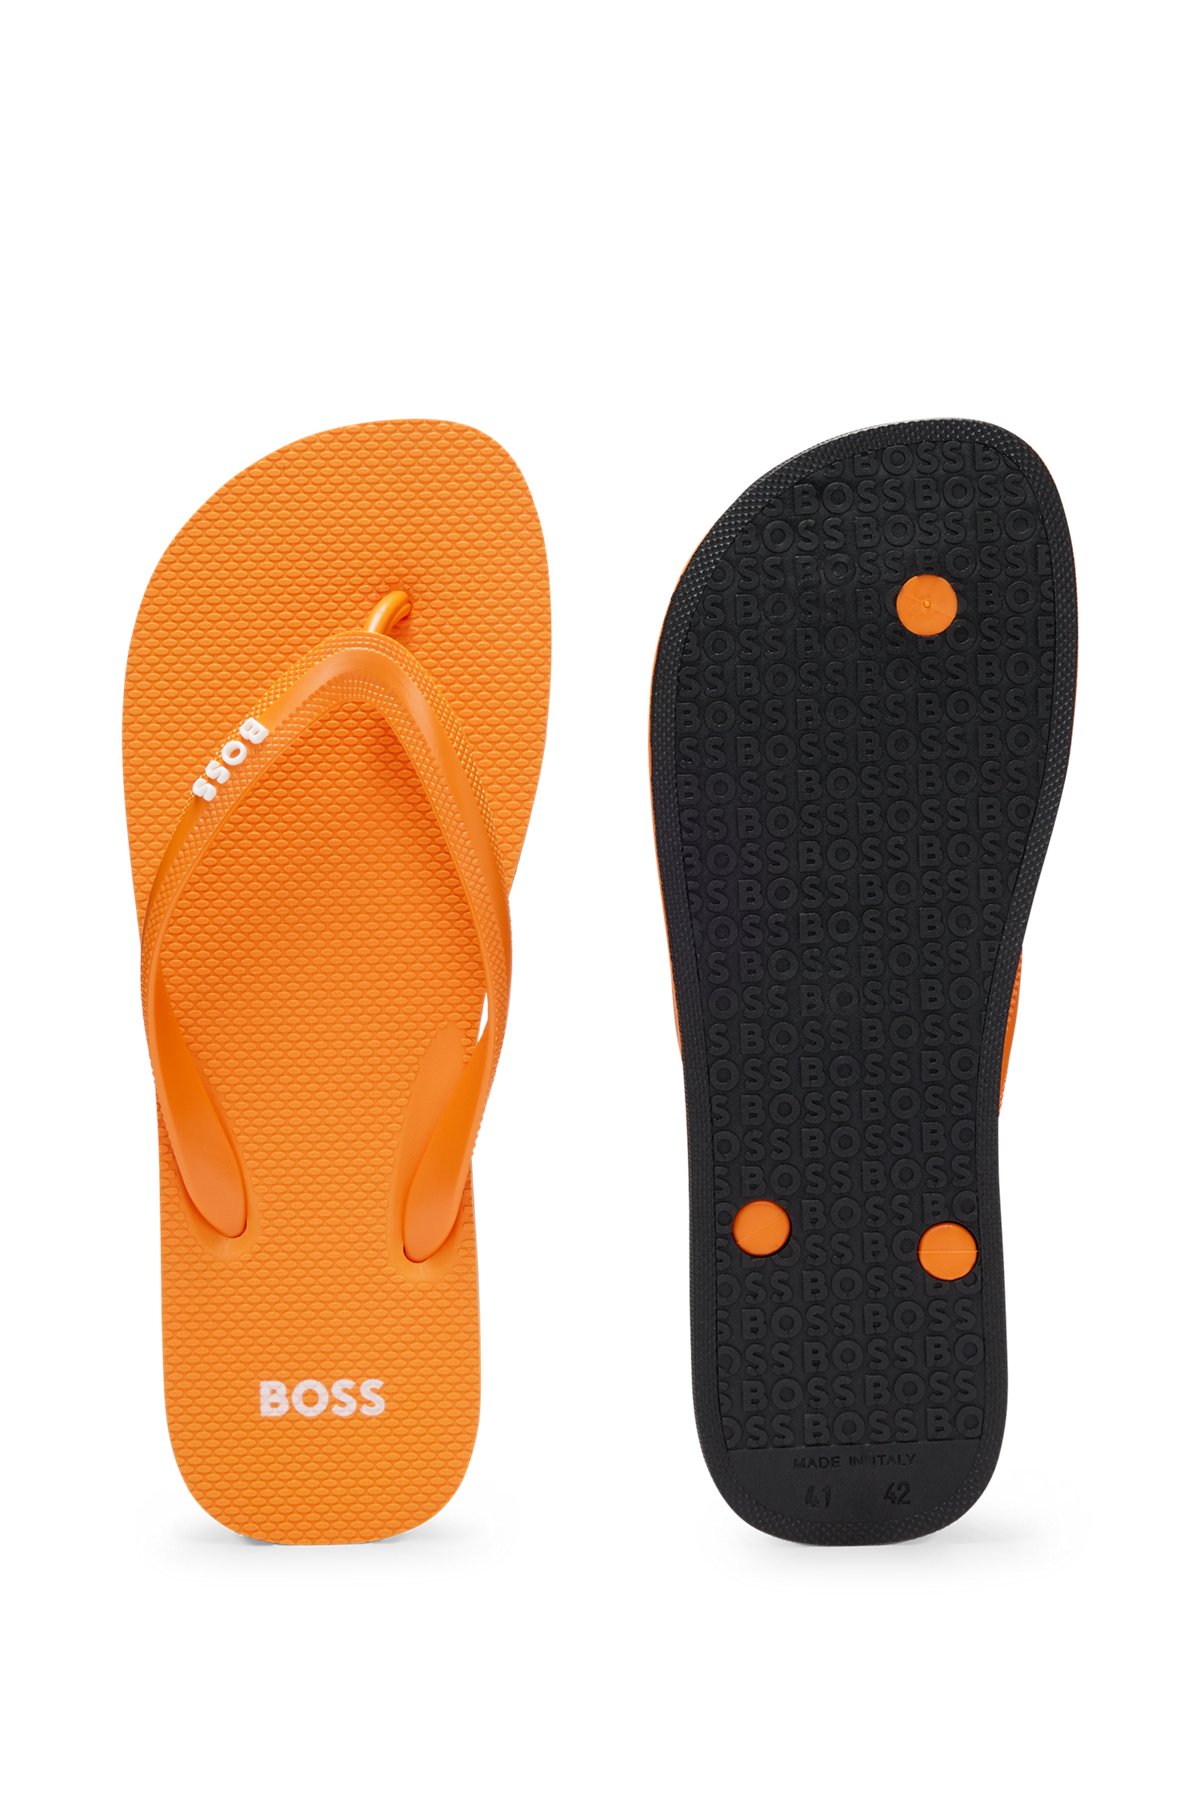 Italian-made flip-flops with branded strap, Orange